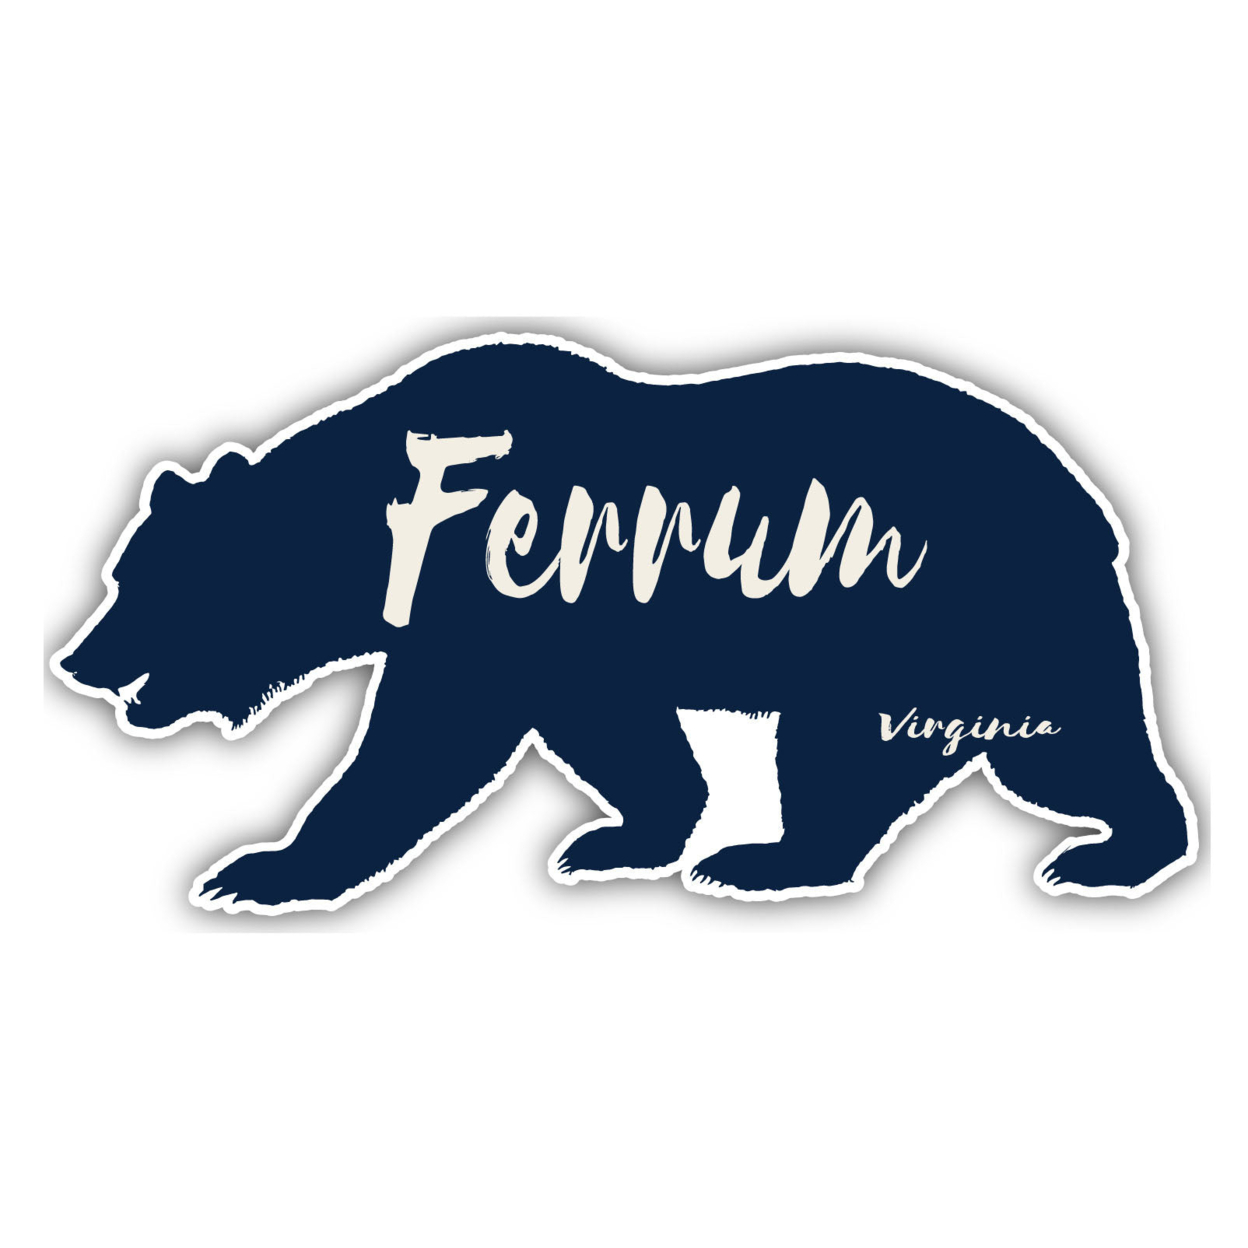 Ferrum Virginia Souvenir Decorative Stickers (Choose Theme And Size) - 4-Pack, 12-Inch, Bear